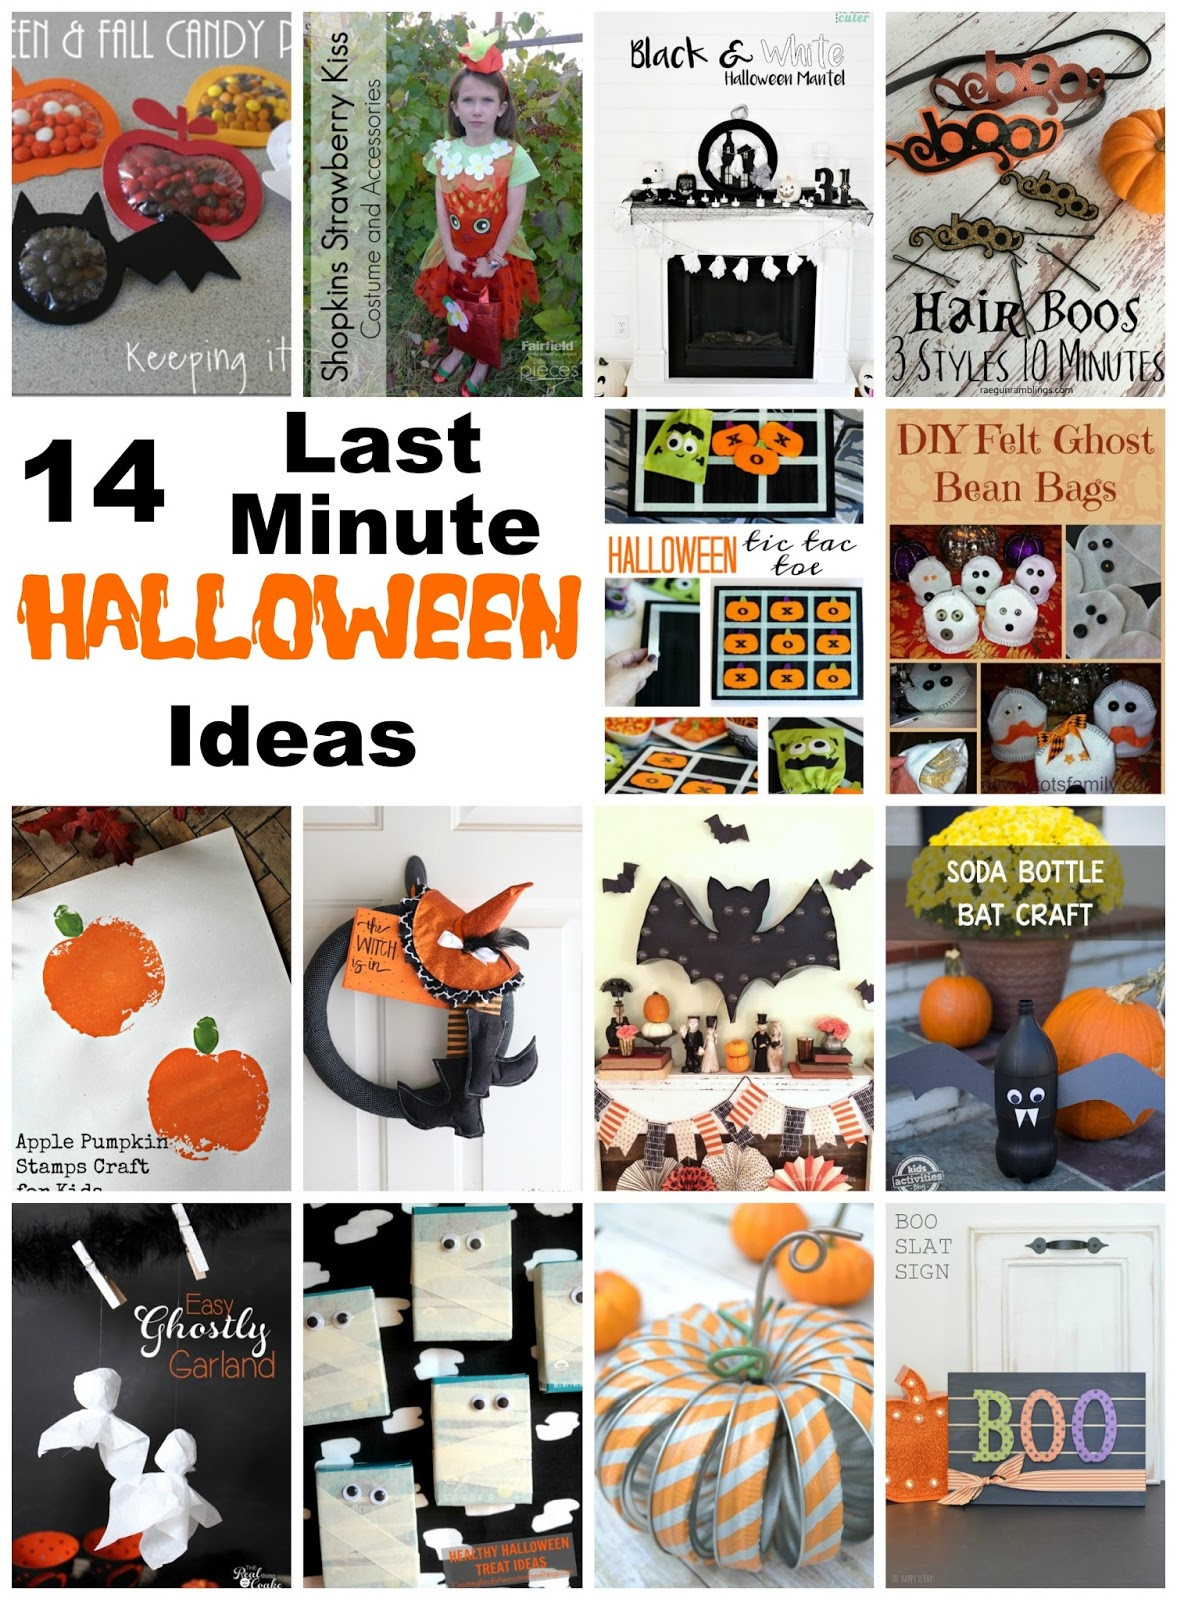 Last Minute Halloween Party Ideas
 Keeping it Simple Last Minute Halloween Ideas MMM 353